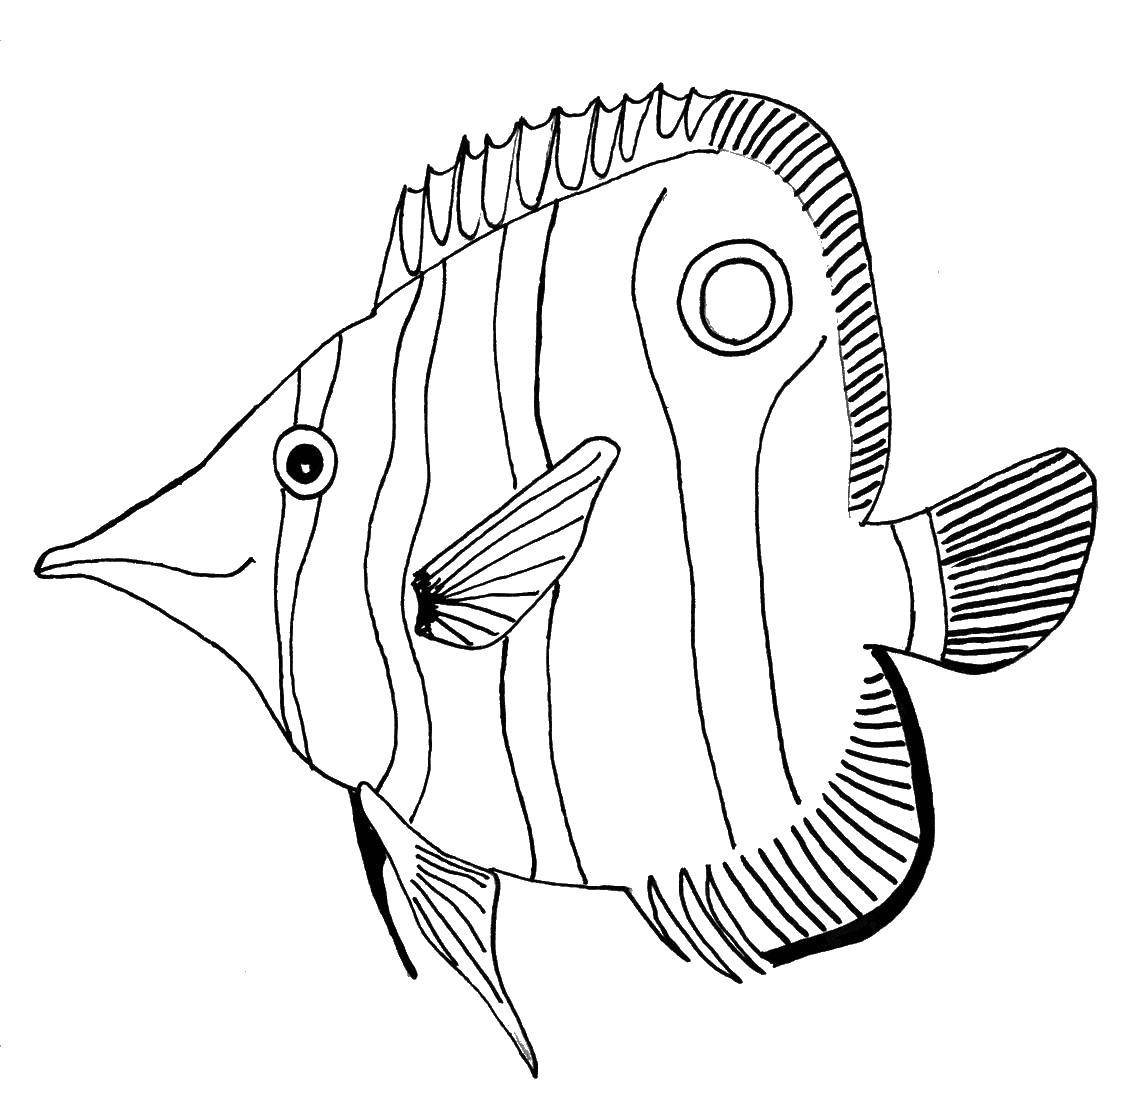 Coloring Zebra catfish. Category fish. Tags:  fish.